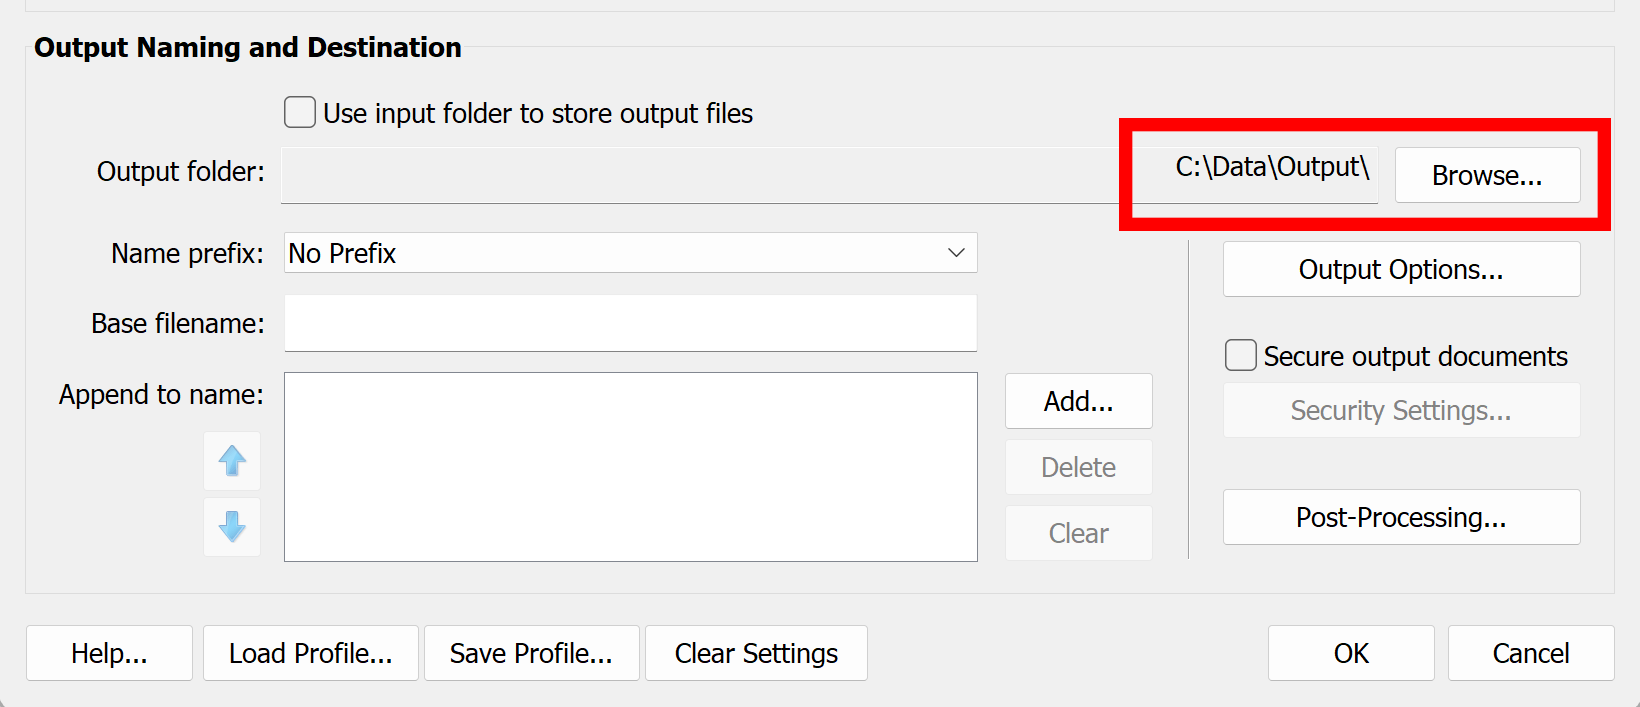 Press Browse button to select an output folder